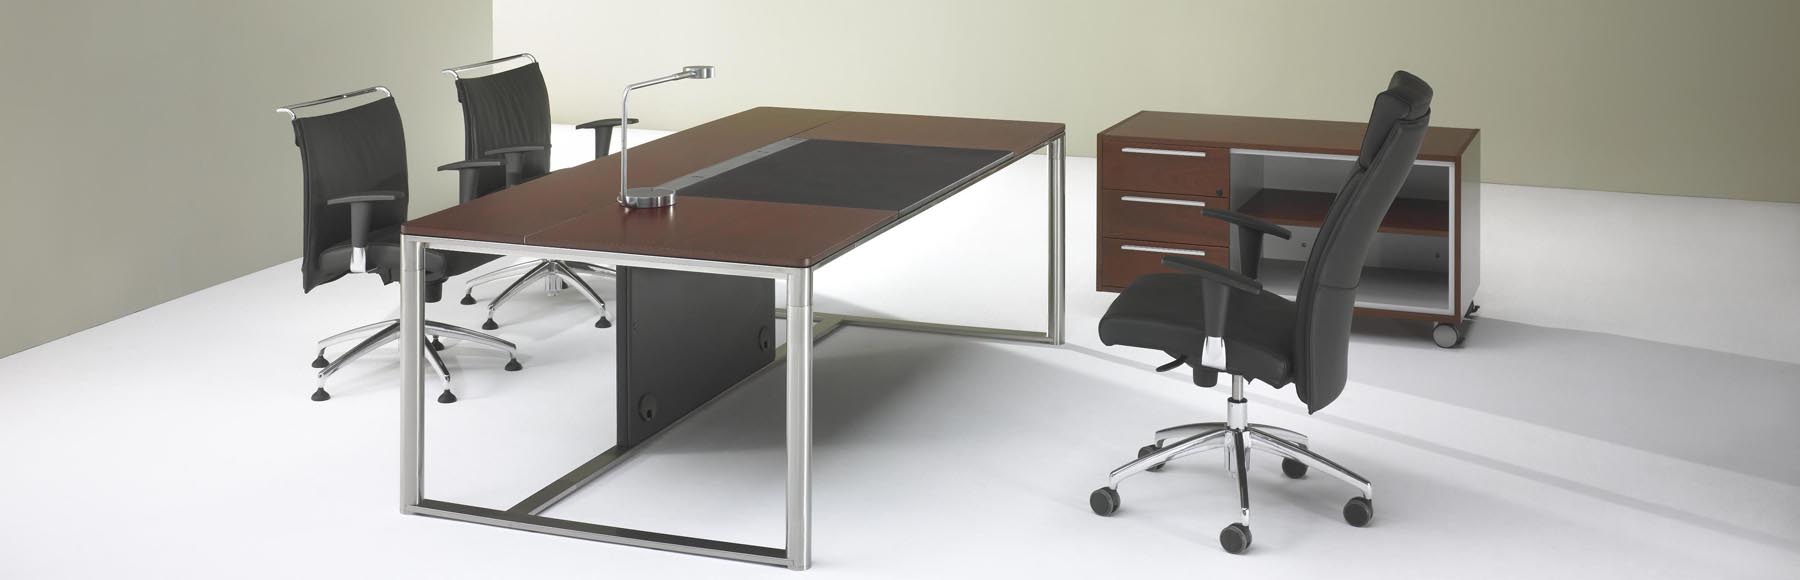 Executive Desks & Tables